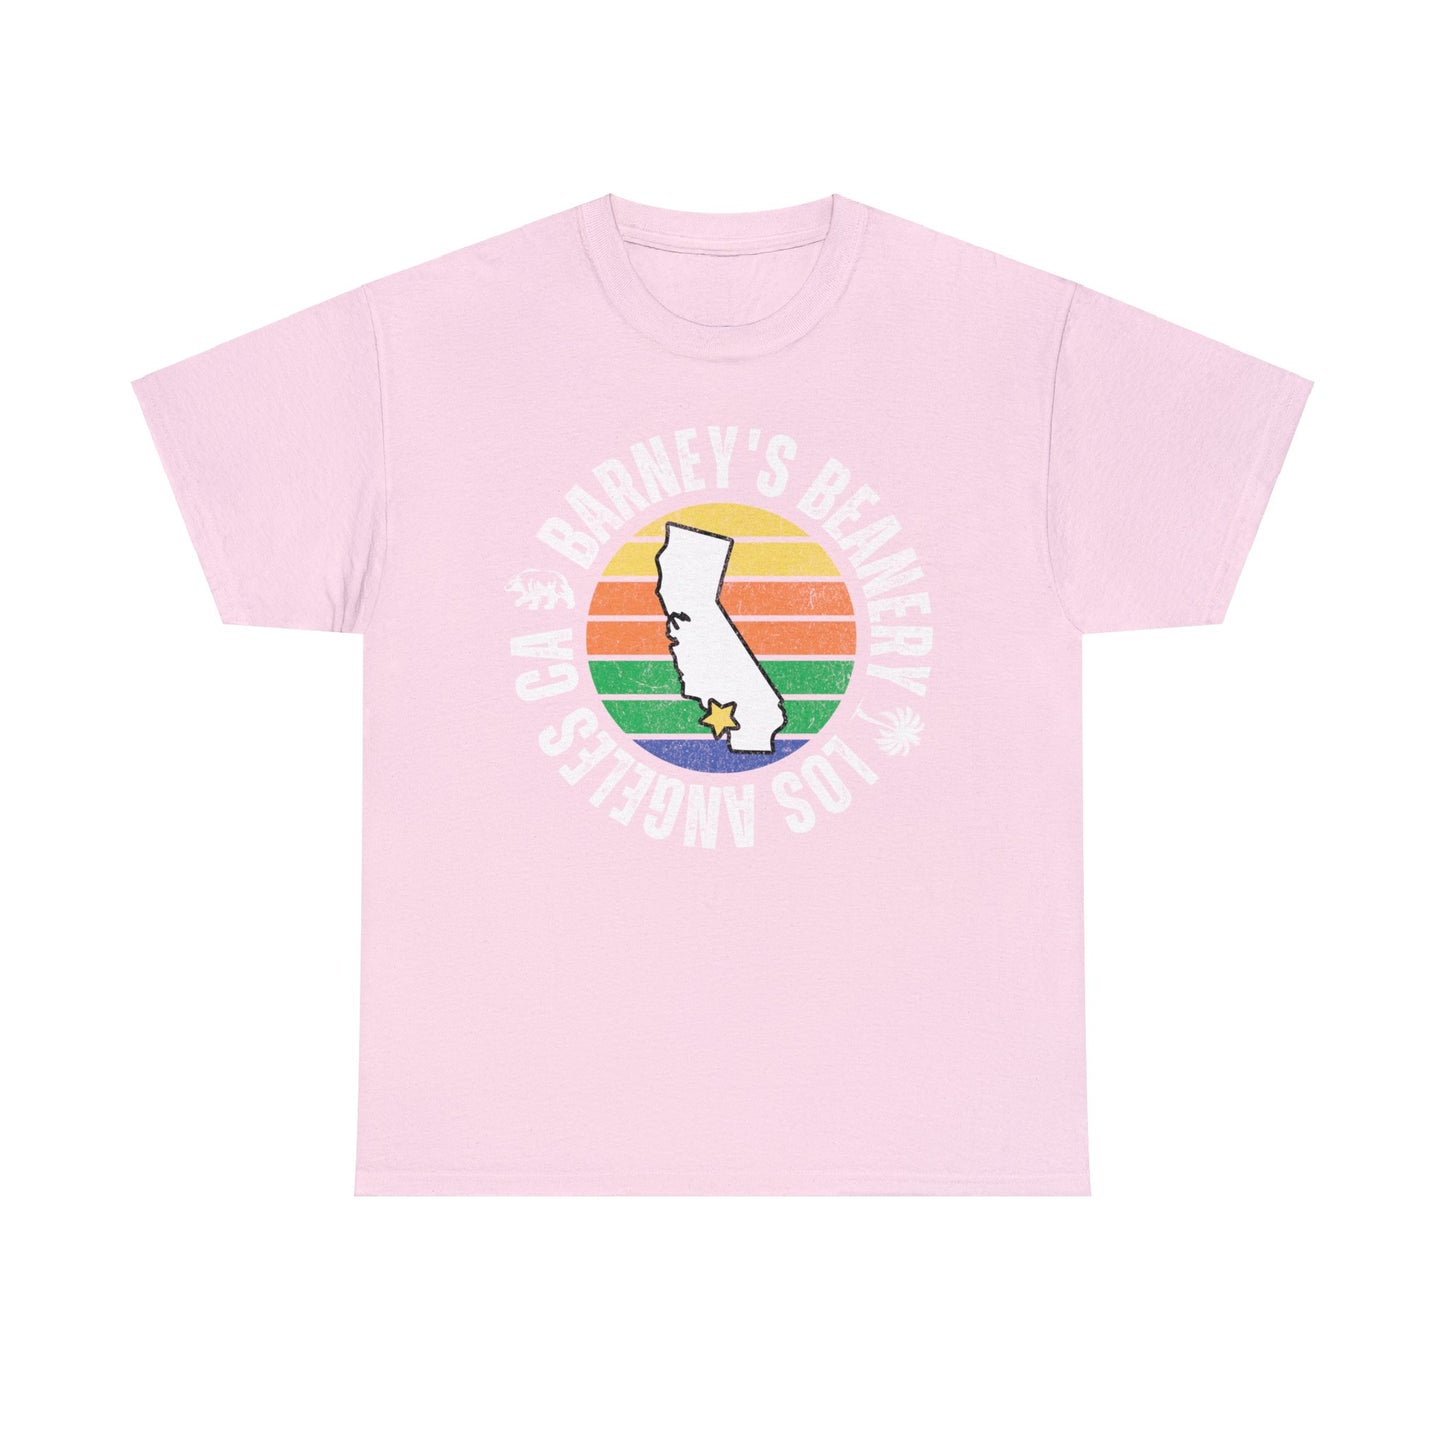 Retro Sunset | BARNEY'S BEANERY - Women's Retro Graphic Tee | Light Pink Gildan 5000 T-Shirt, Front View Flat Lay